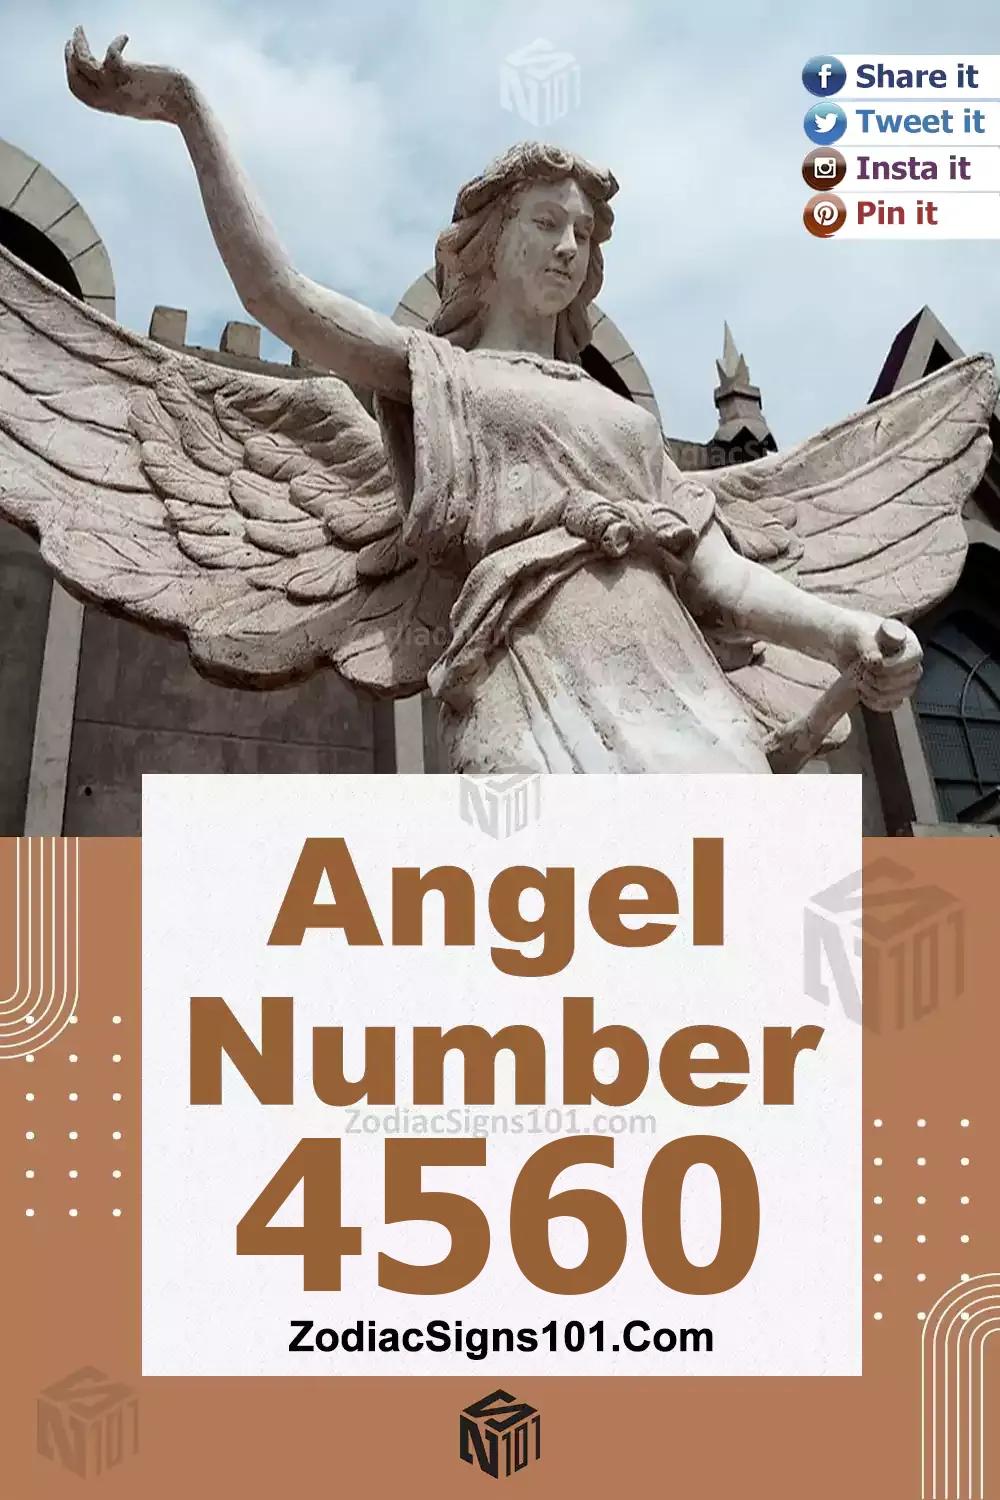 4560-Angel-Number-Meaning.jpg